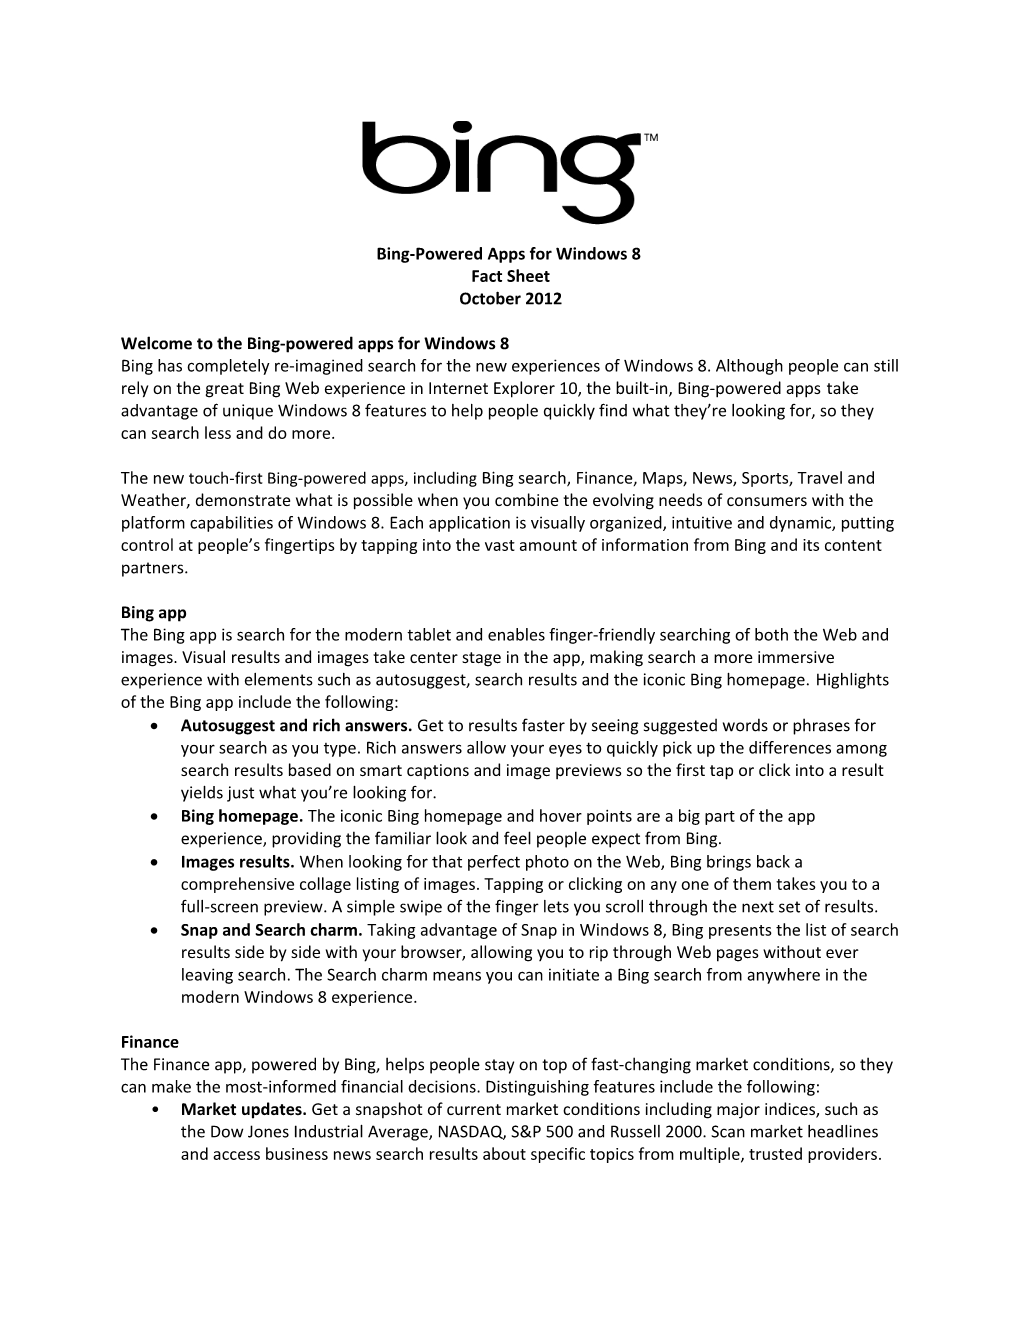 Bing for Windows 8 Fact Sheet